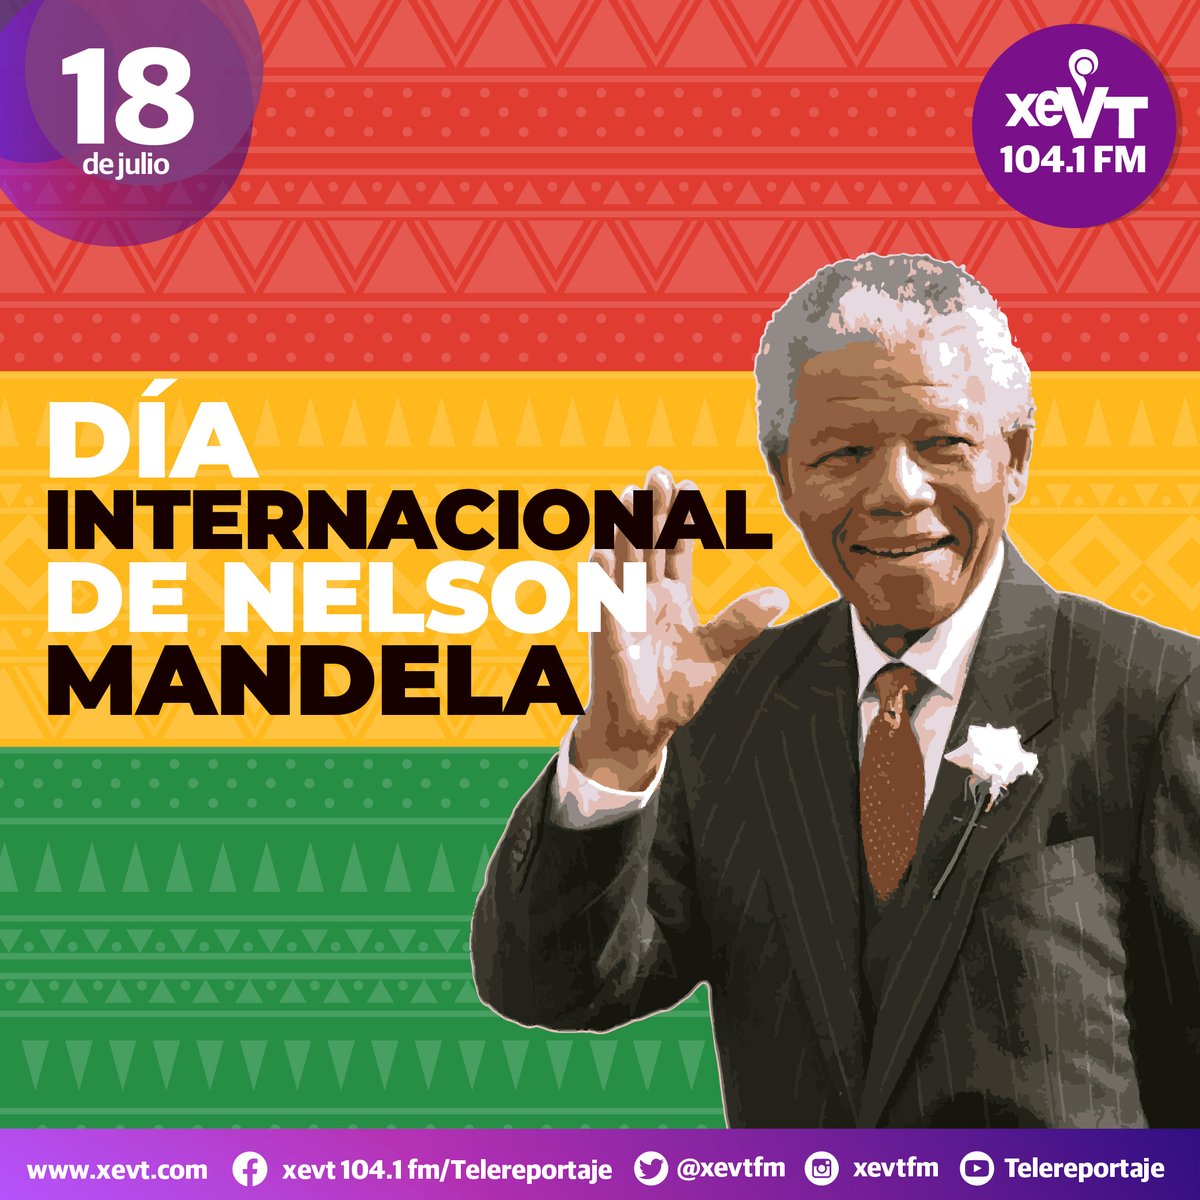 #18DeJulio  | Día Internacional de Nelson Mandela

#LasEfemérides📆 #SeñalQueUne🔗 #XEVT 🖲️